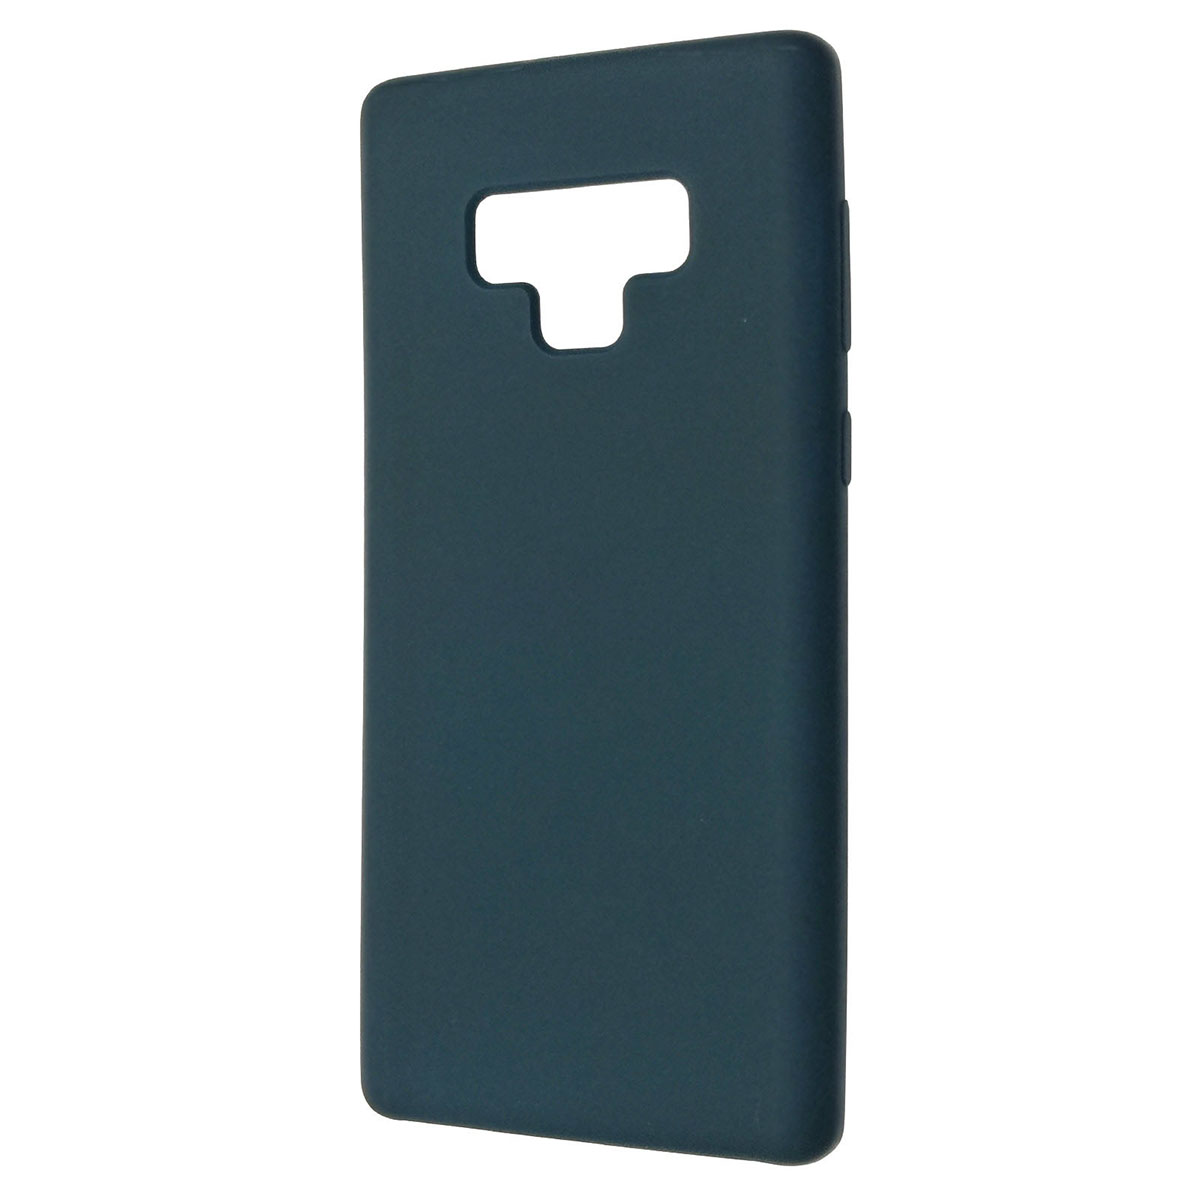 Чехол накладка Silicon Cover для SAMSUNG Galaxy Note 9, силикон, бархат, цвет синий.